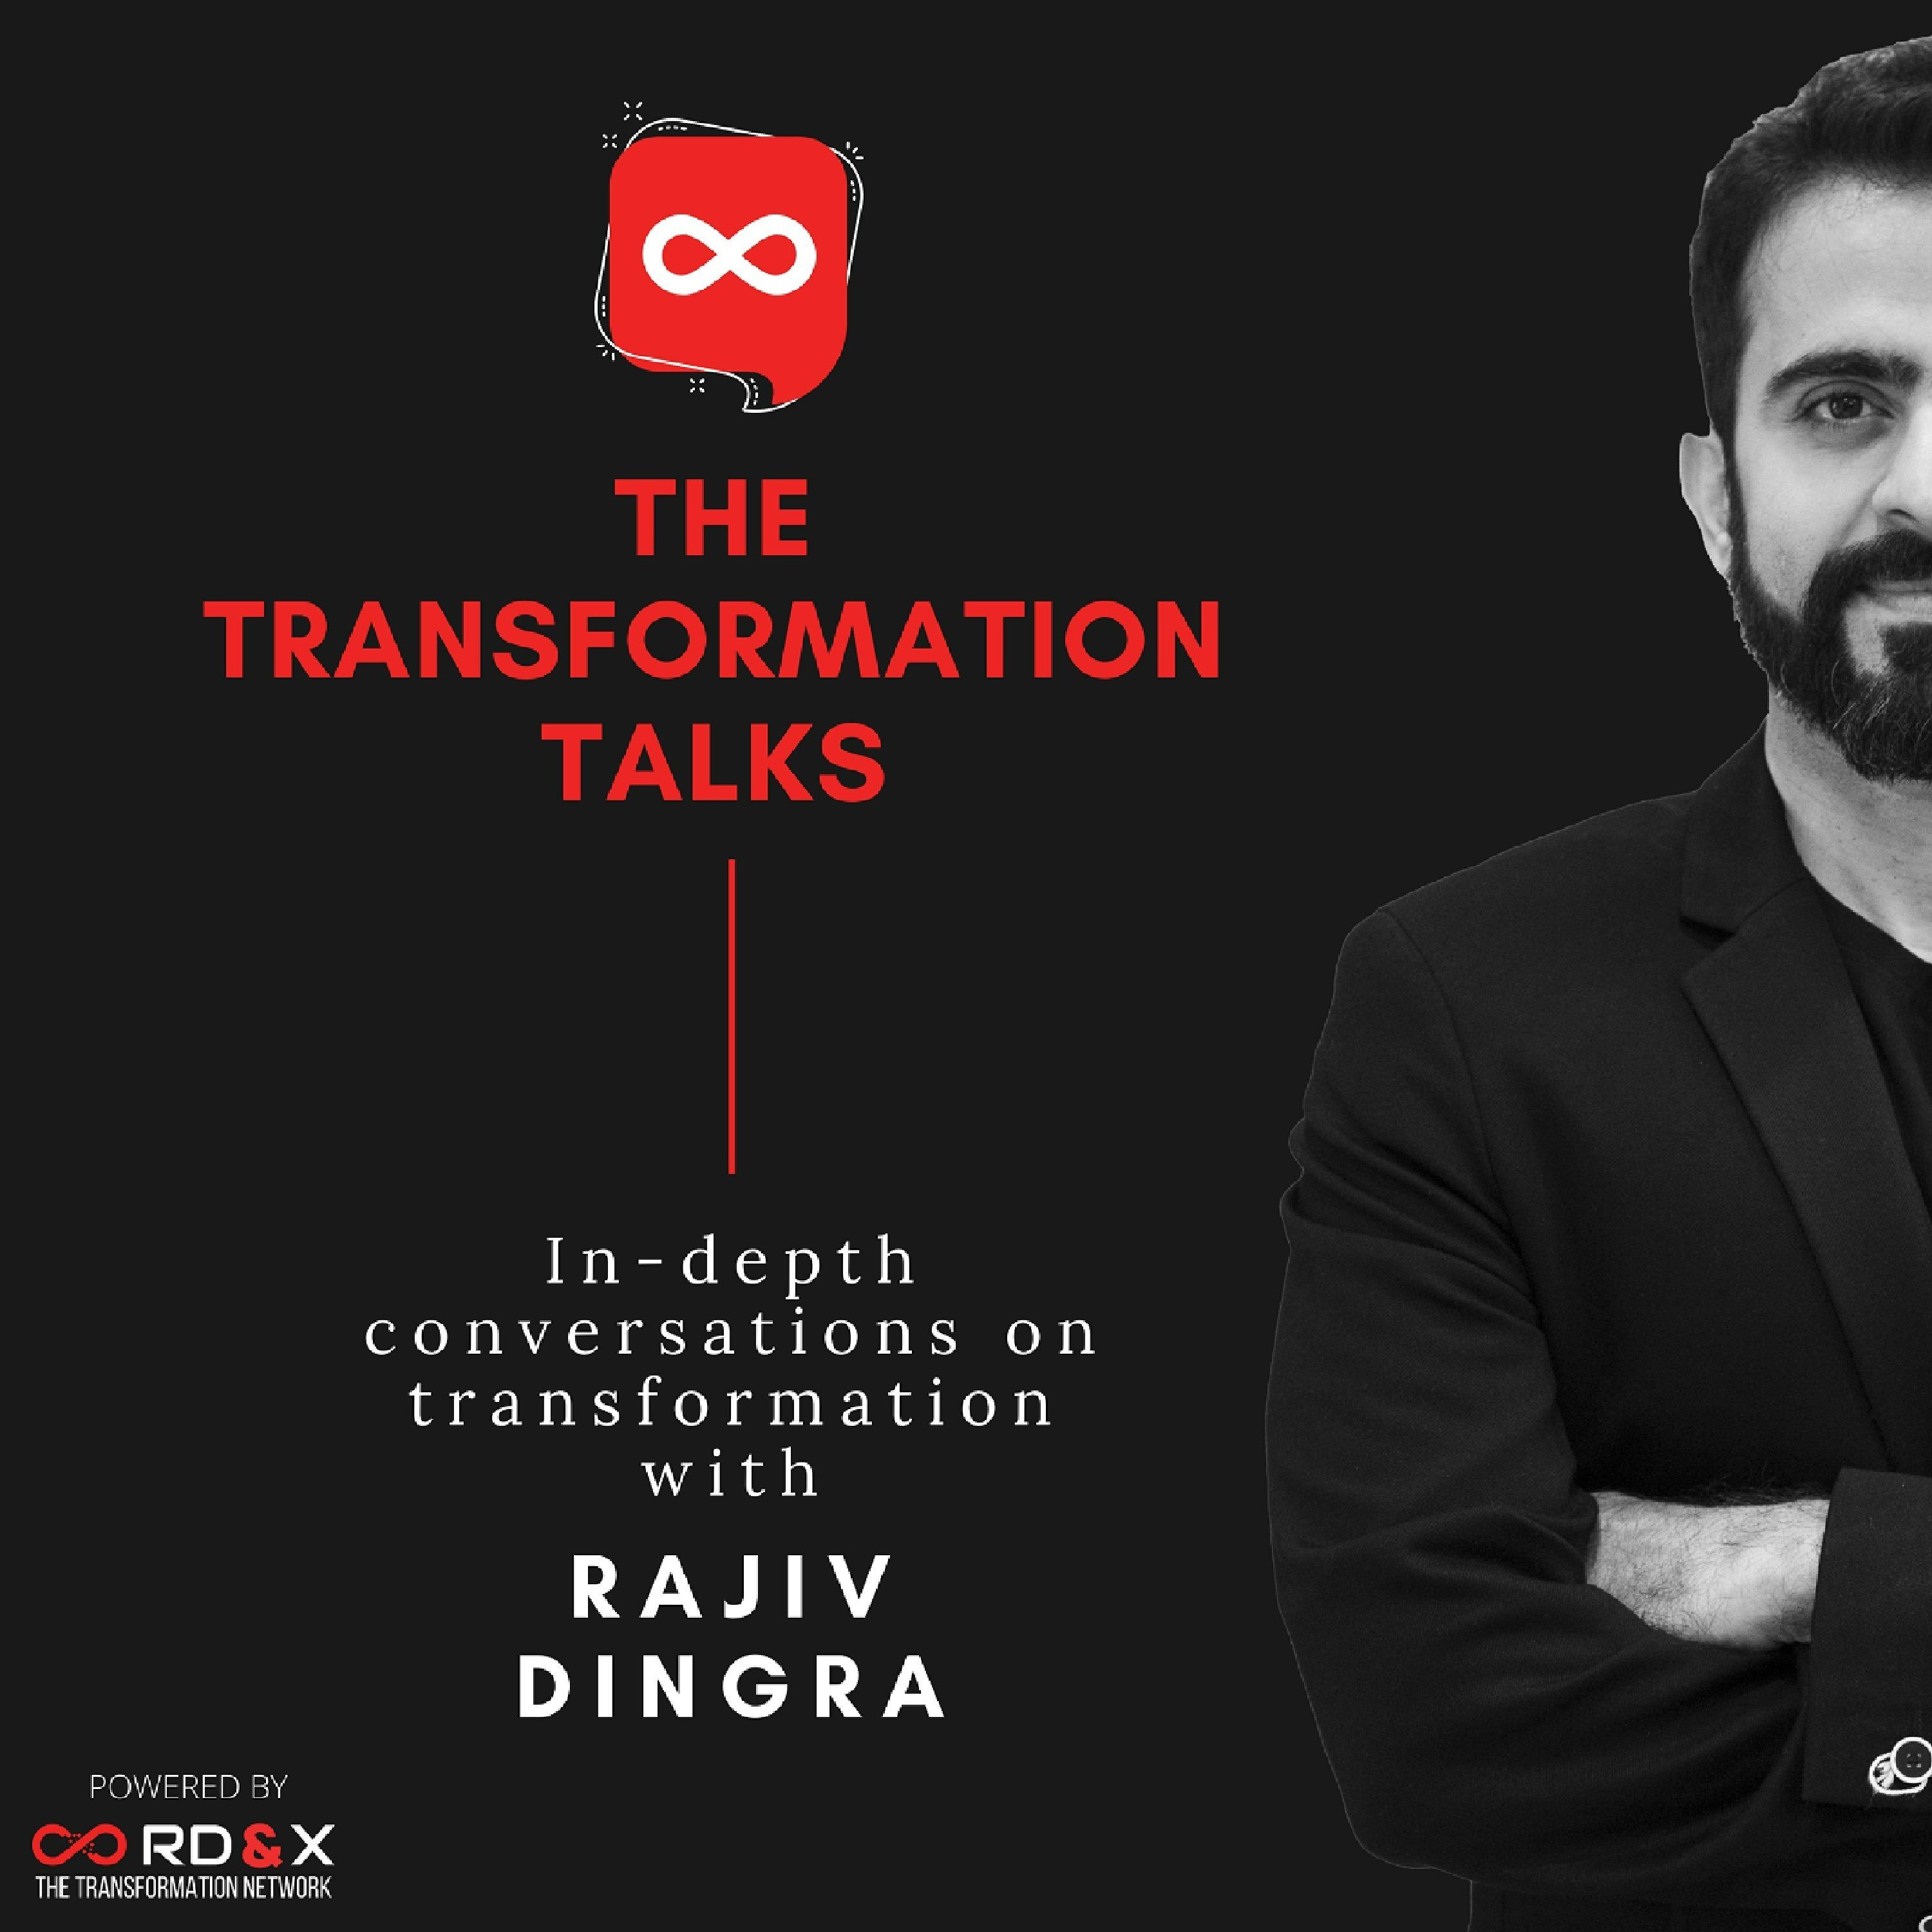 The Transformation Talks with Rajiv Dingra